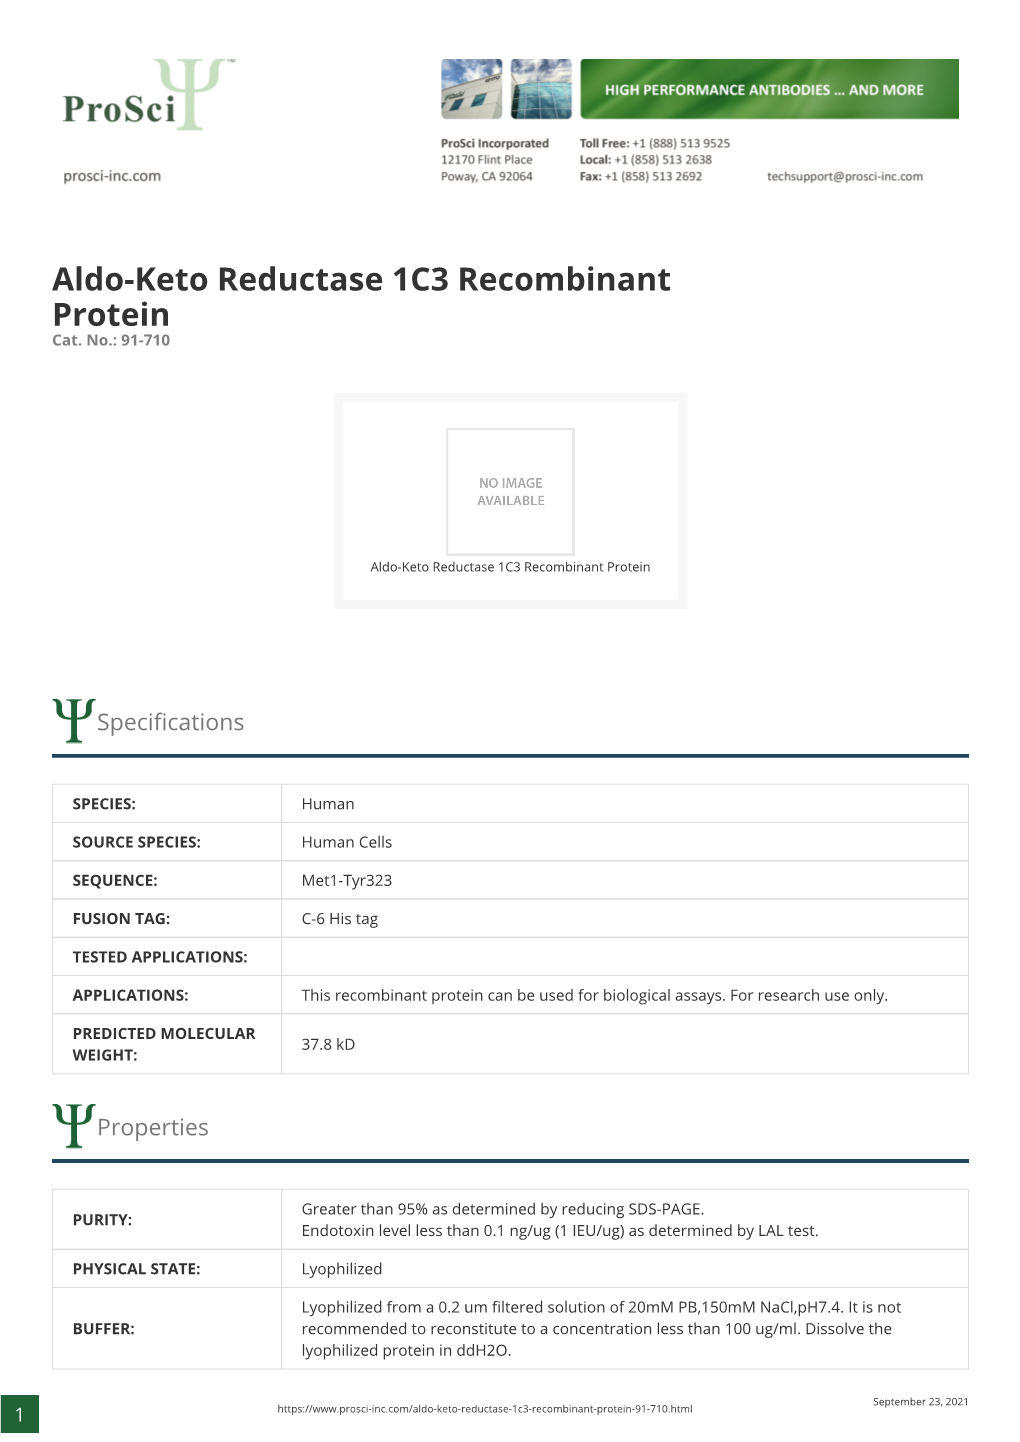 Aldo-Keto Reductase 1C3 Recombinant Protein Cat